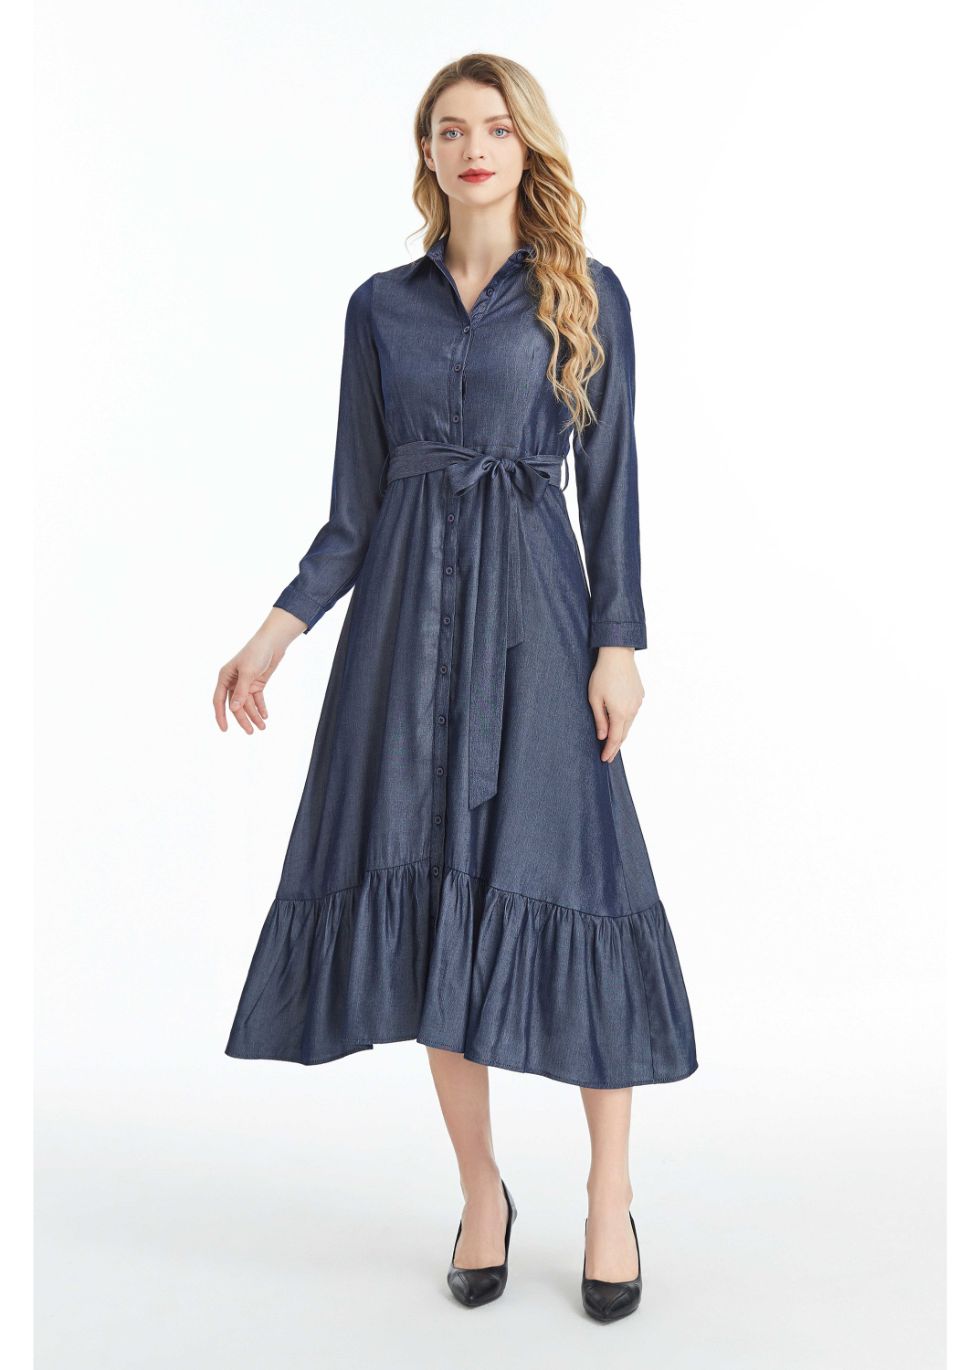 Denim Look Midi Dress with Cuffed Sleeves - figaliciousfood